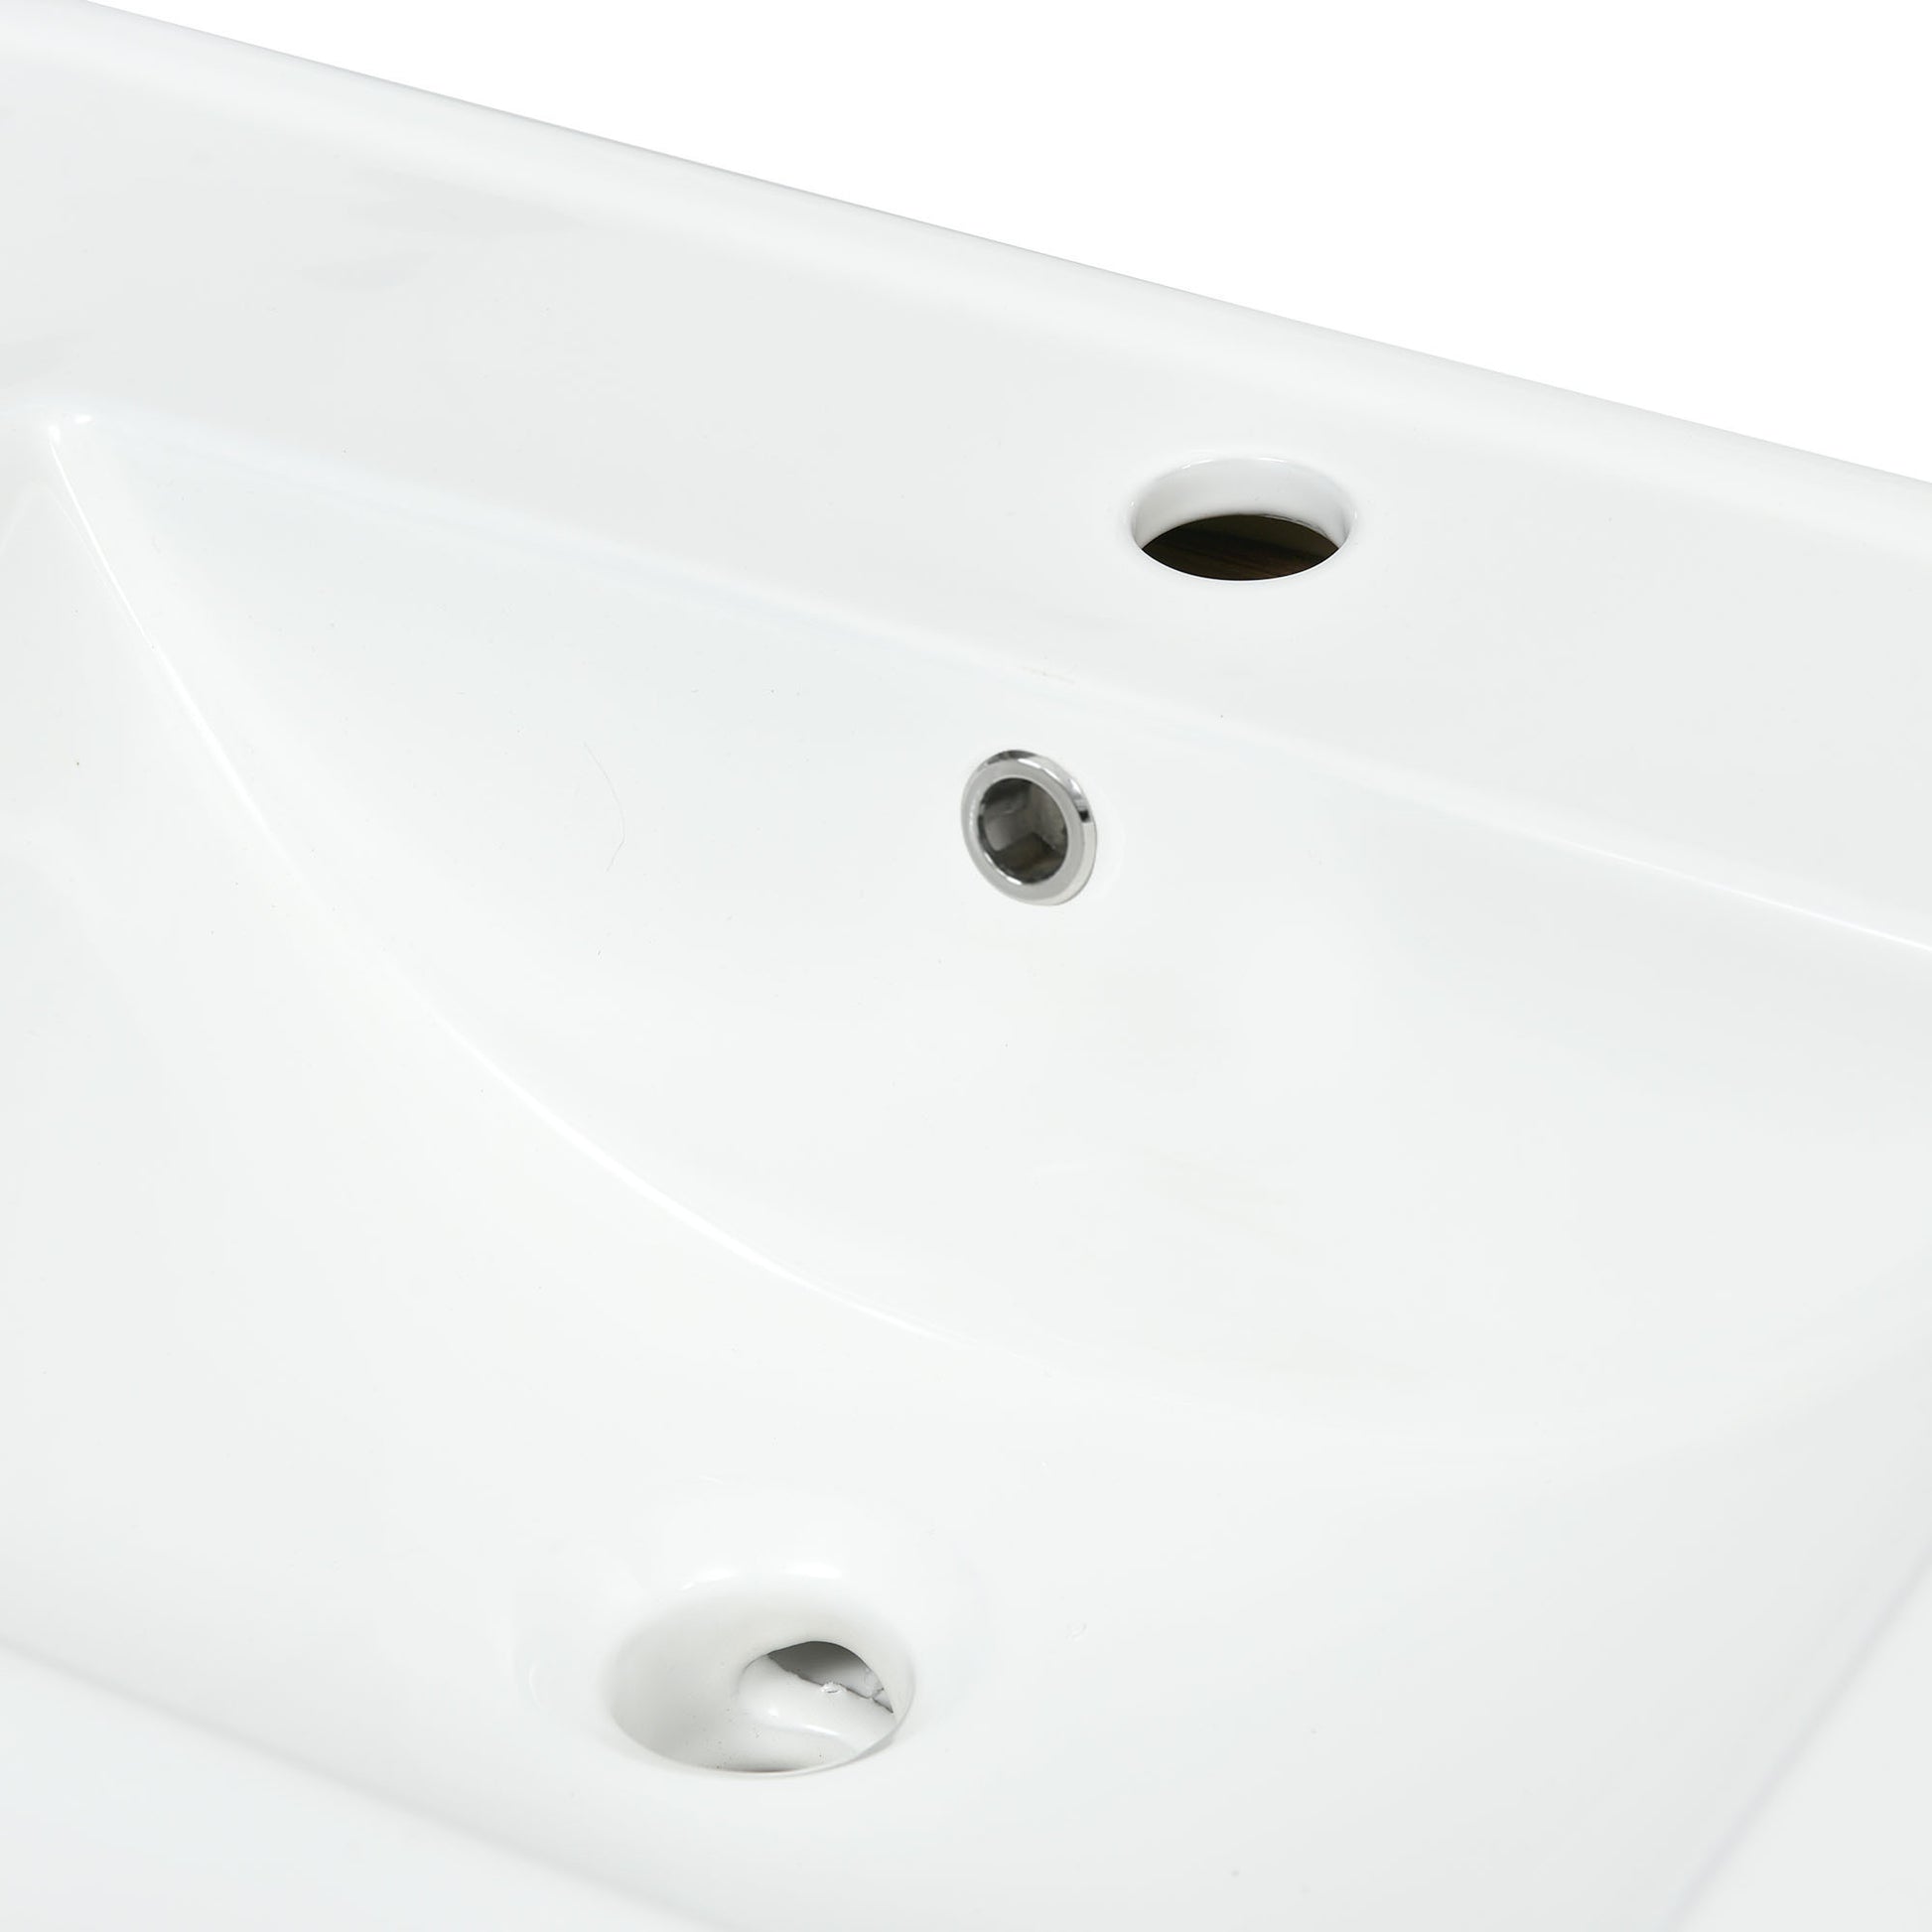 24'' Bathroom Vanity with Ceramic Basin Sink, Modern 3-natural wood-adjustable hinges-modern-mdf